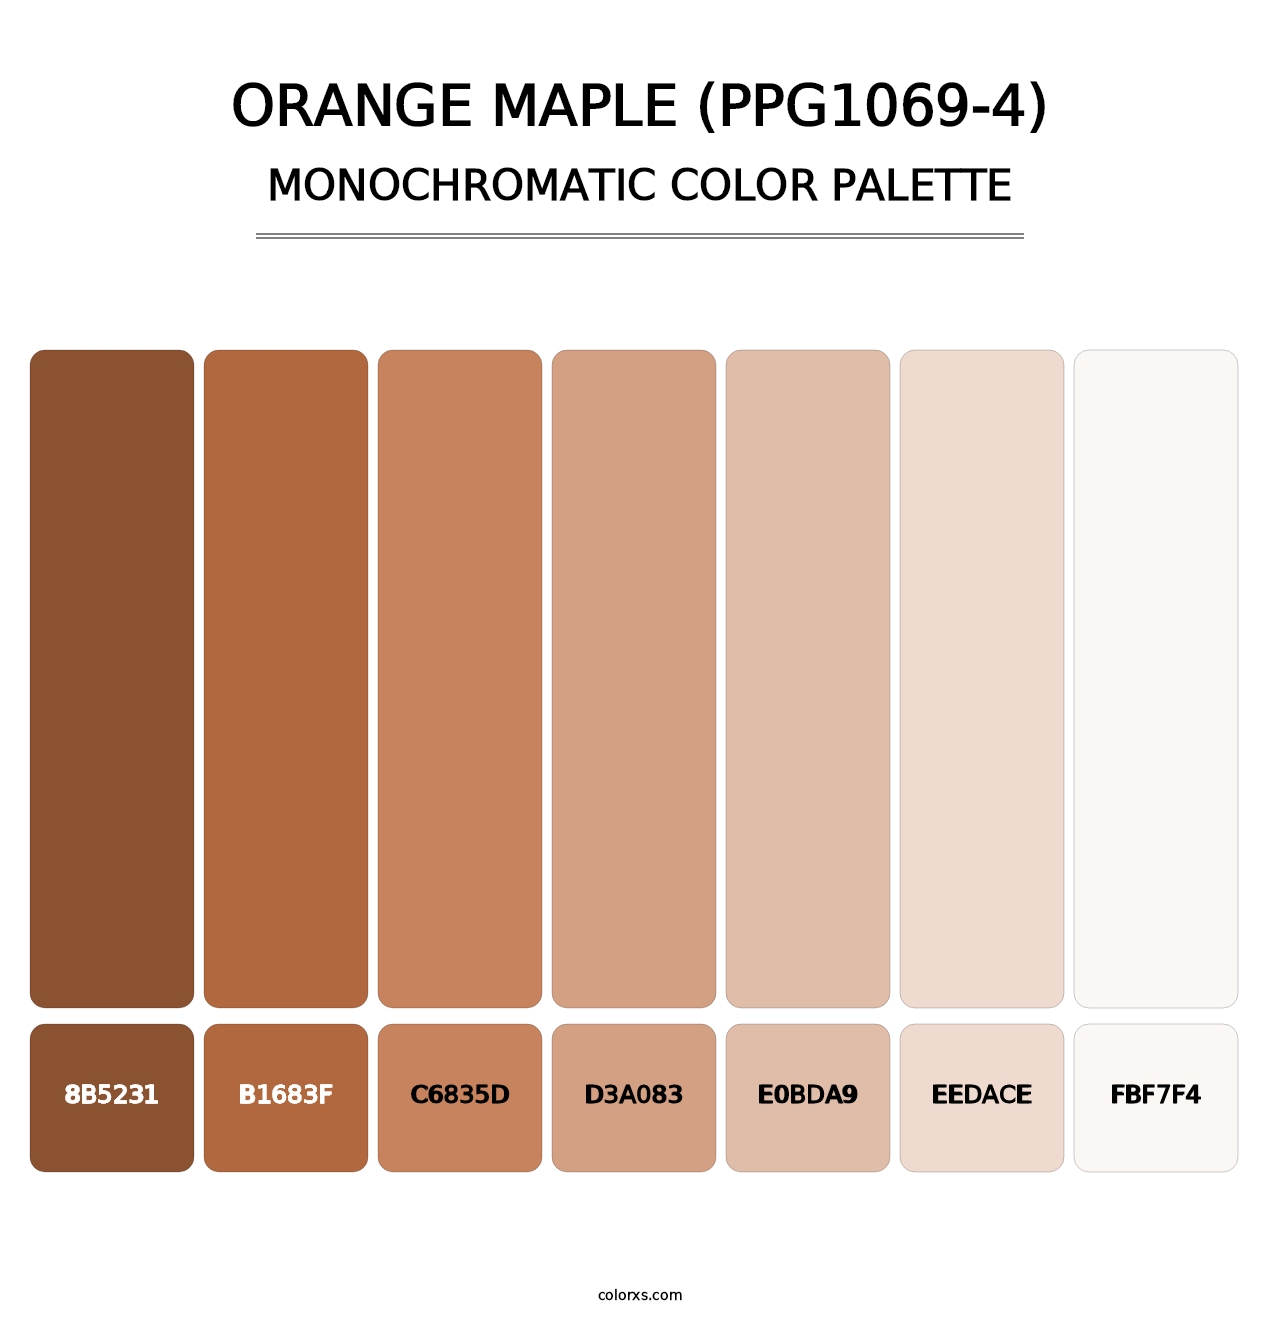 Orange Maple (PPG1069-4) - Monochromatic Color Palette